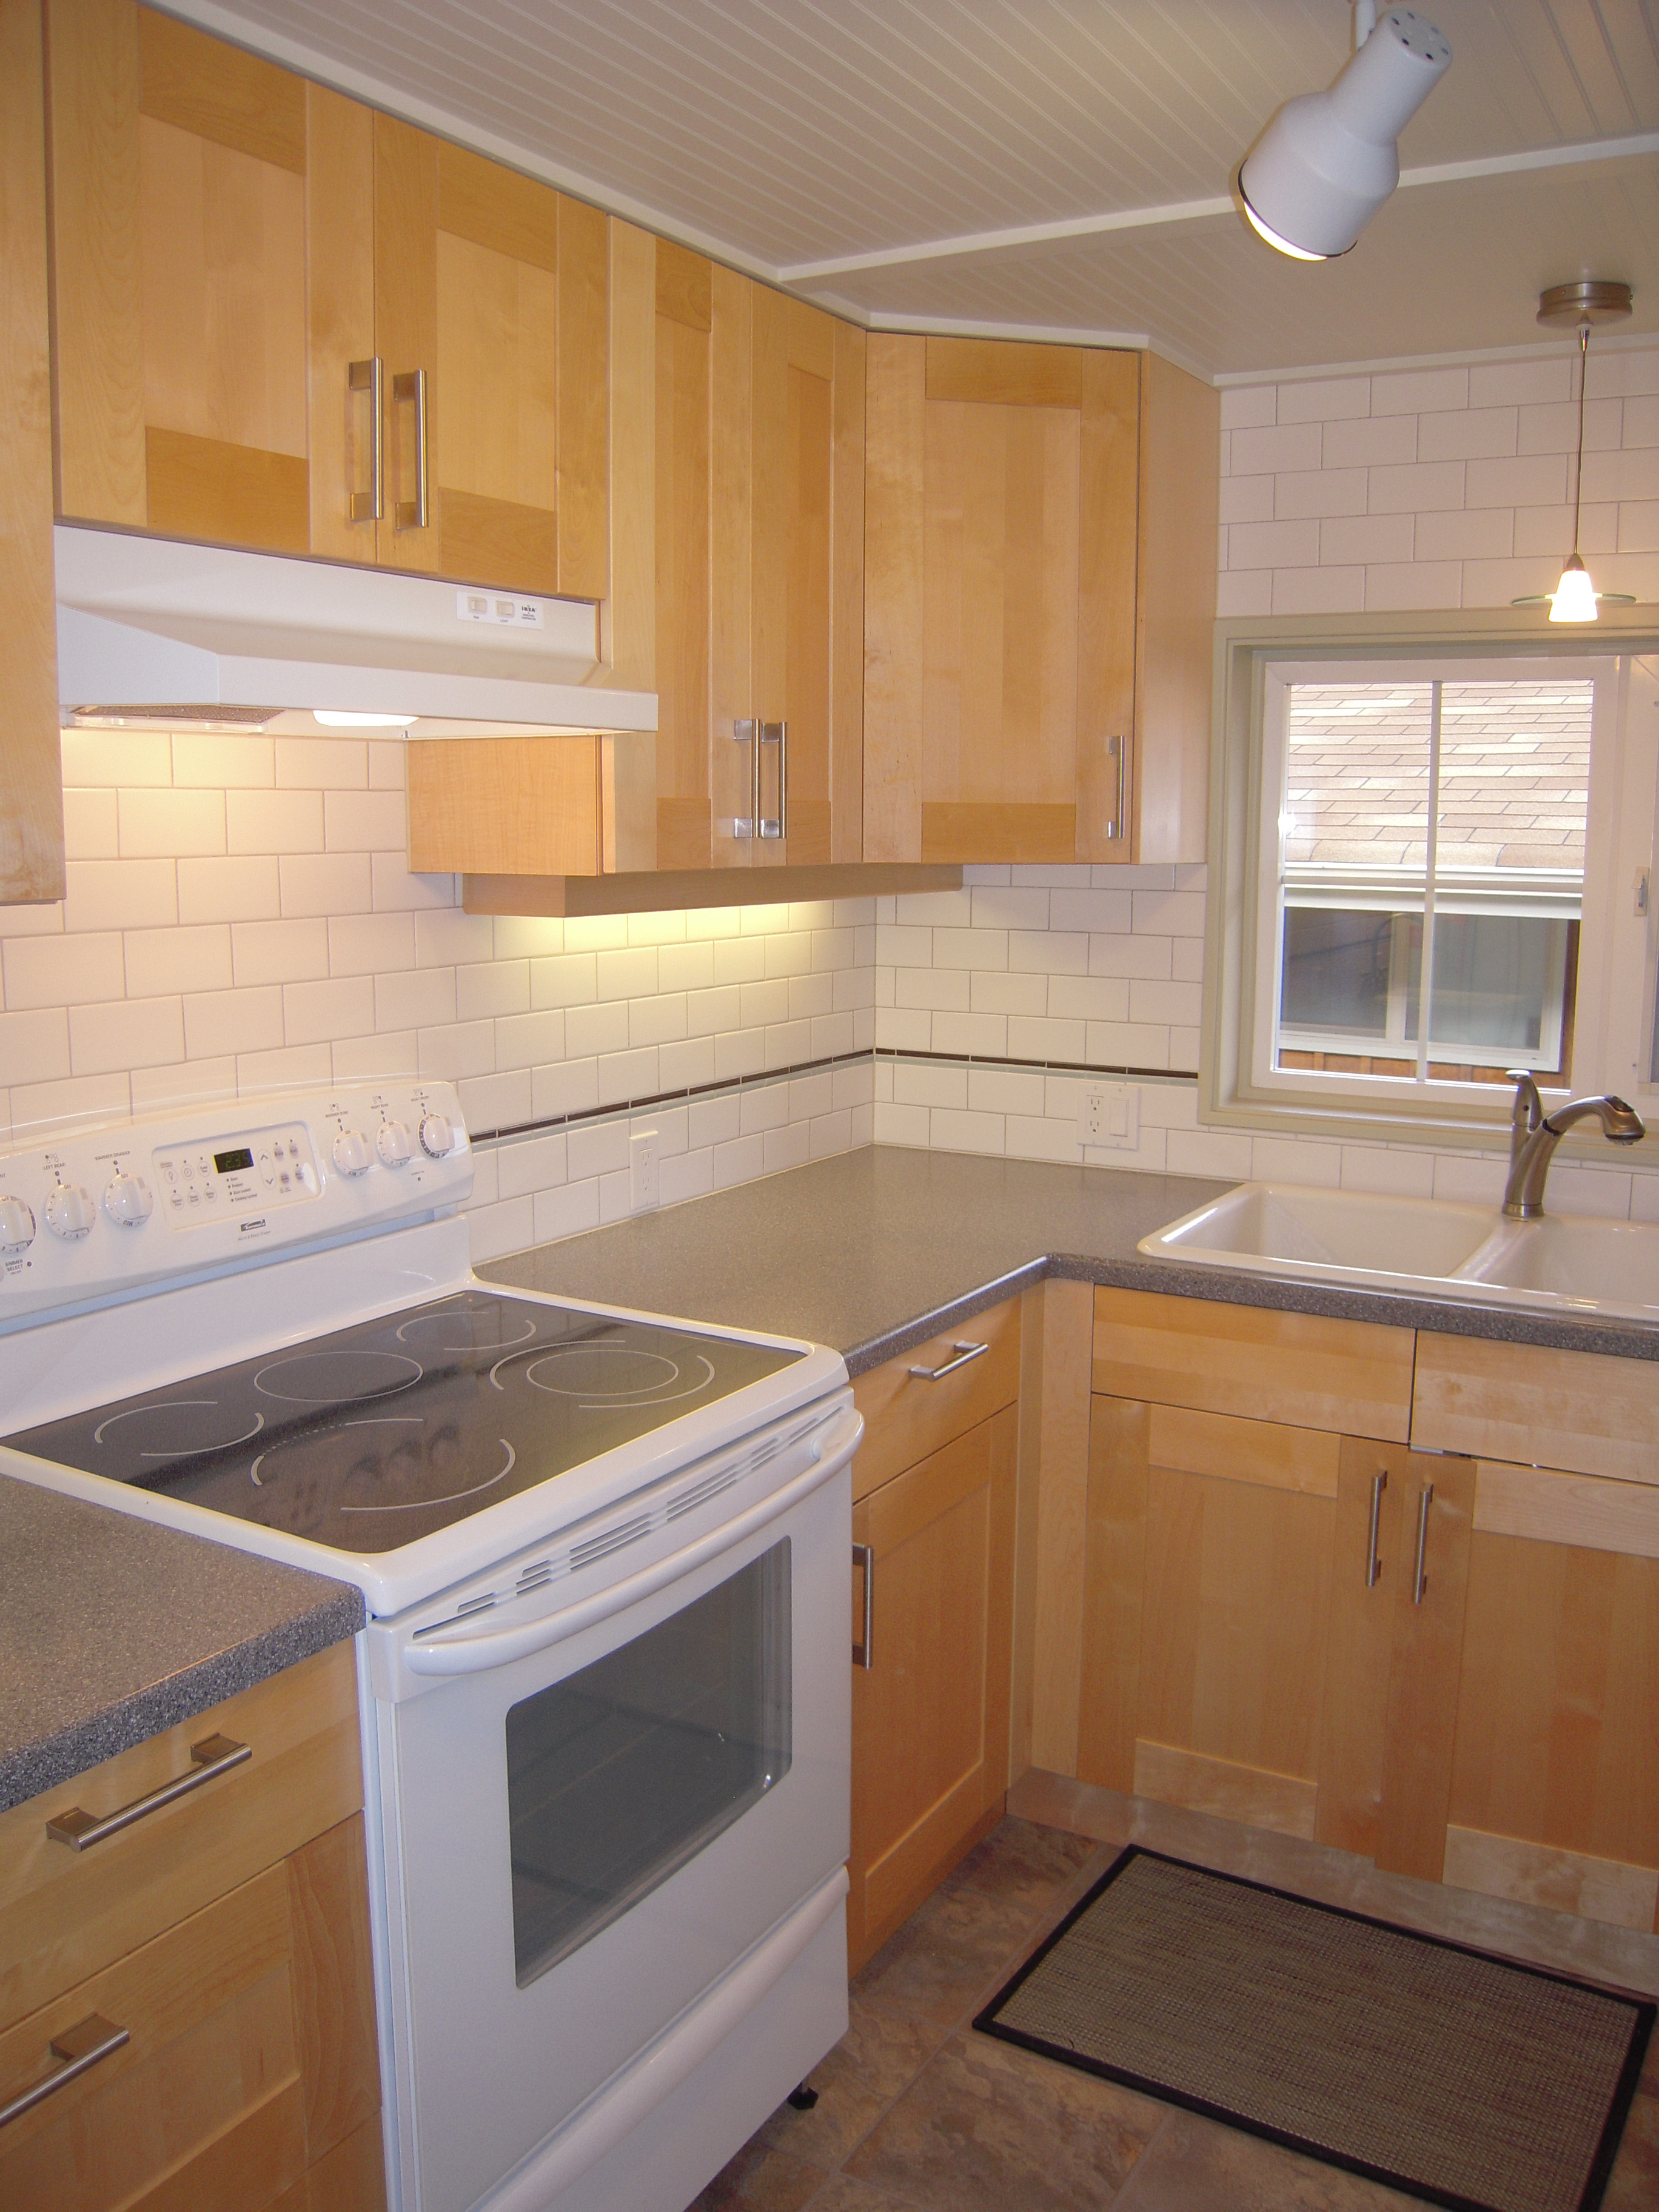 General Contractors Kitchen Remodeling Portland OR :: IKEA kitchen remodels